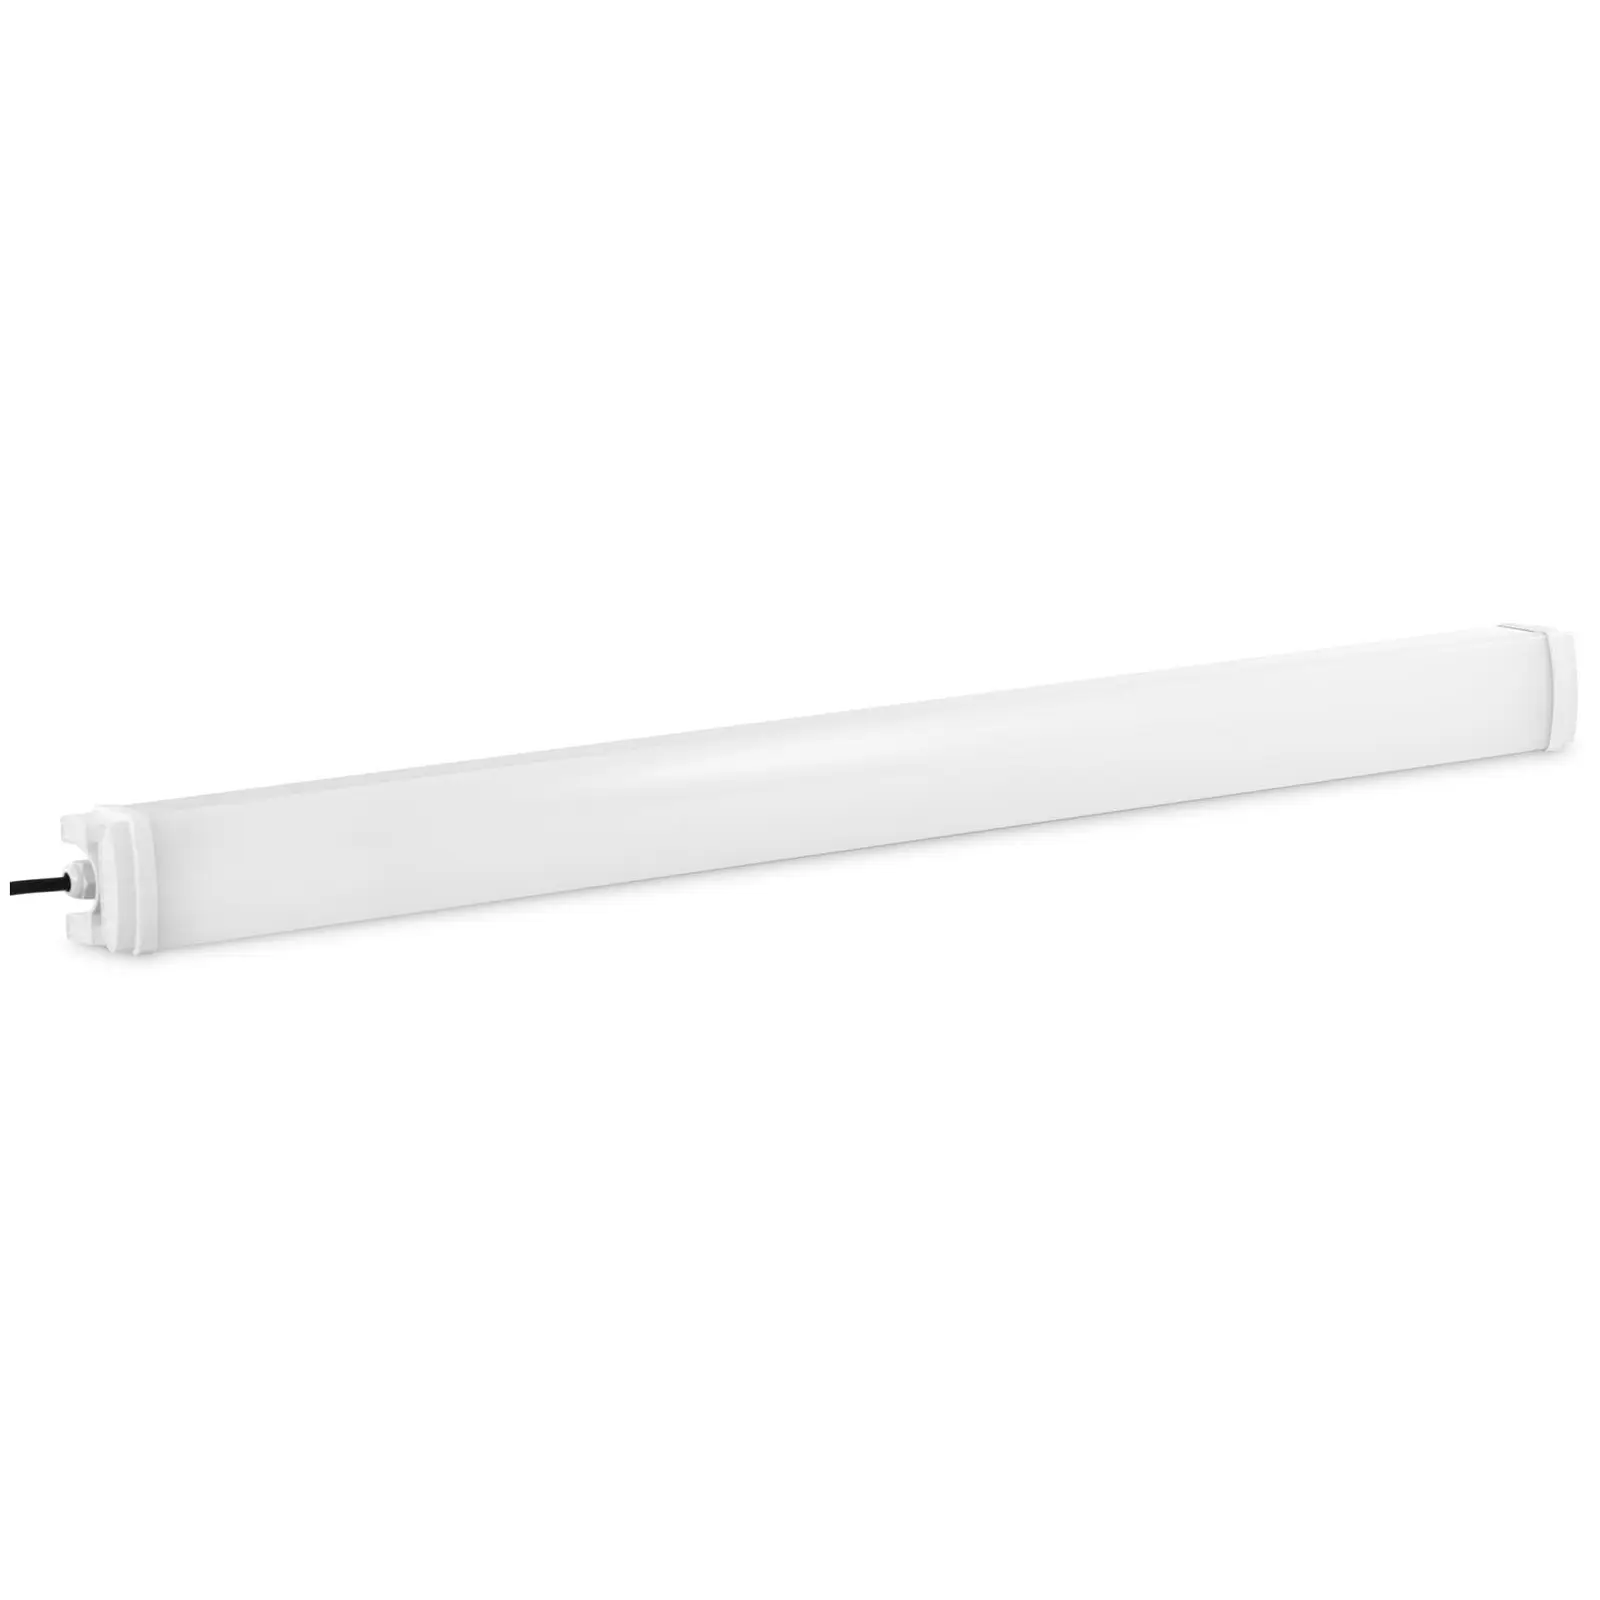 LED impermeabile - 60 W - 120 cm